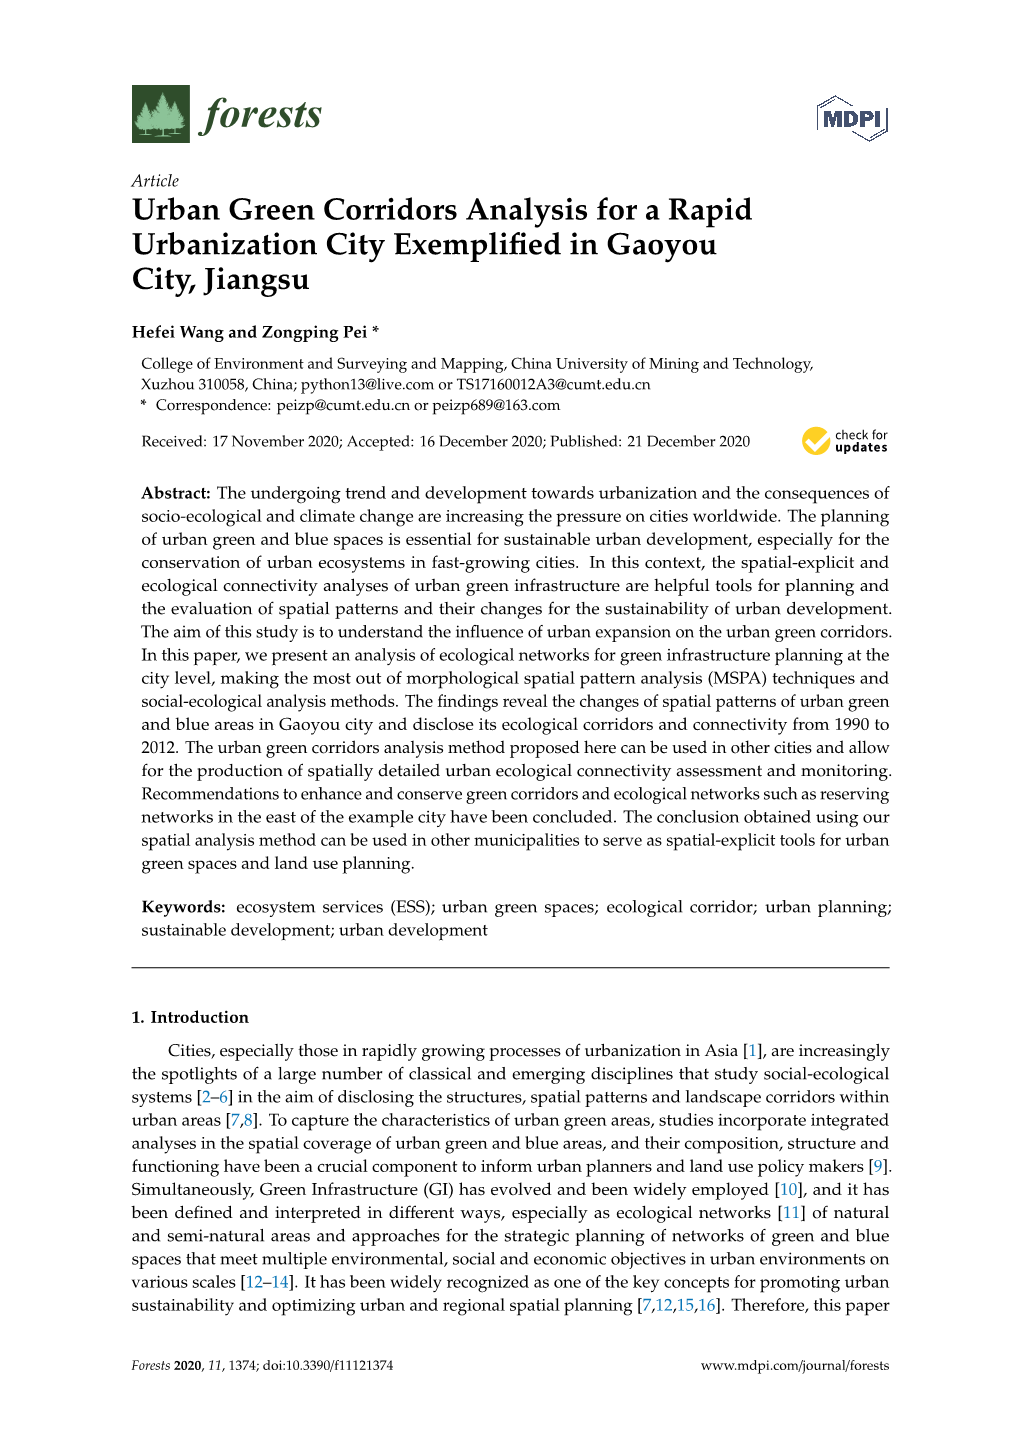 Urban Green Corridors Analysis for a Rapid Urbanization City Exempliﬁed in Gaoyou City, Jiangsu